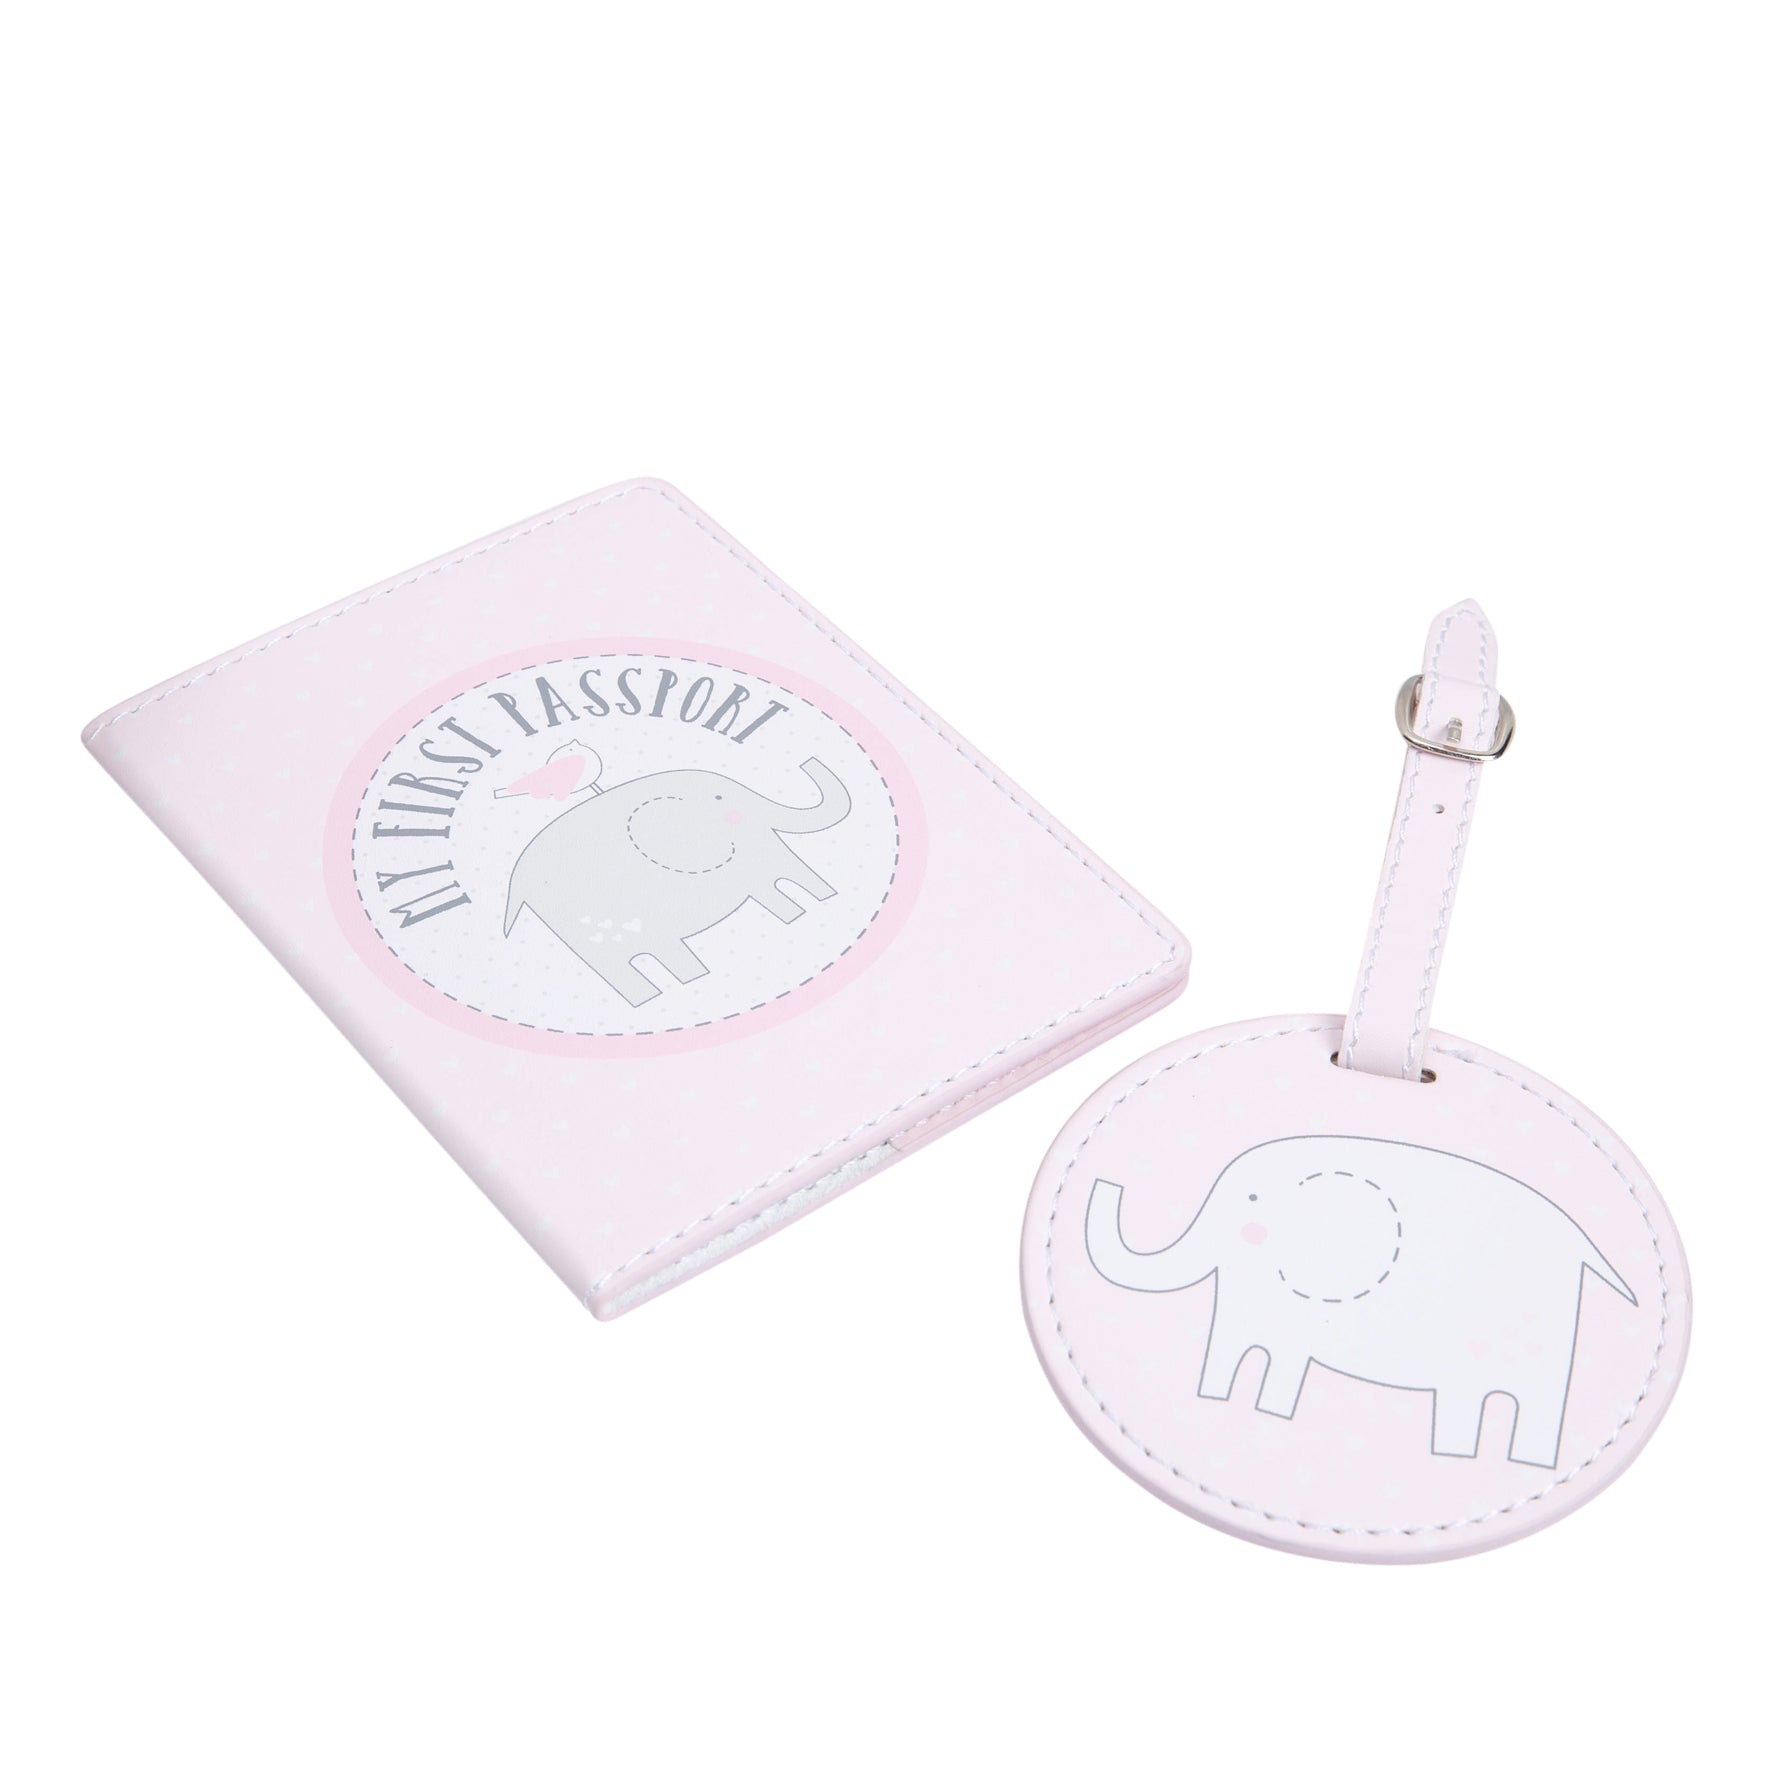 Baby Girl Passport and Luggage Tag Set Gift Elephant Design CG1720P 